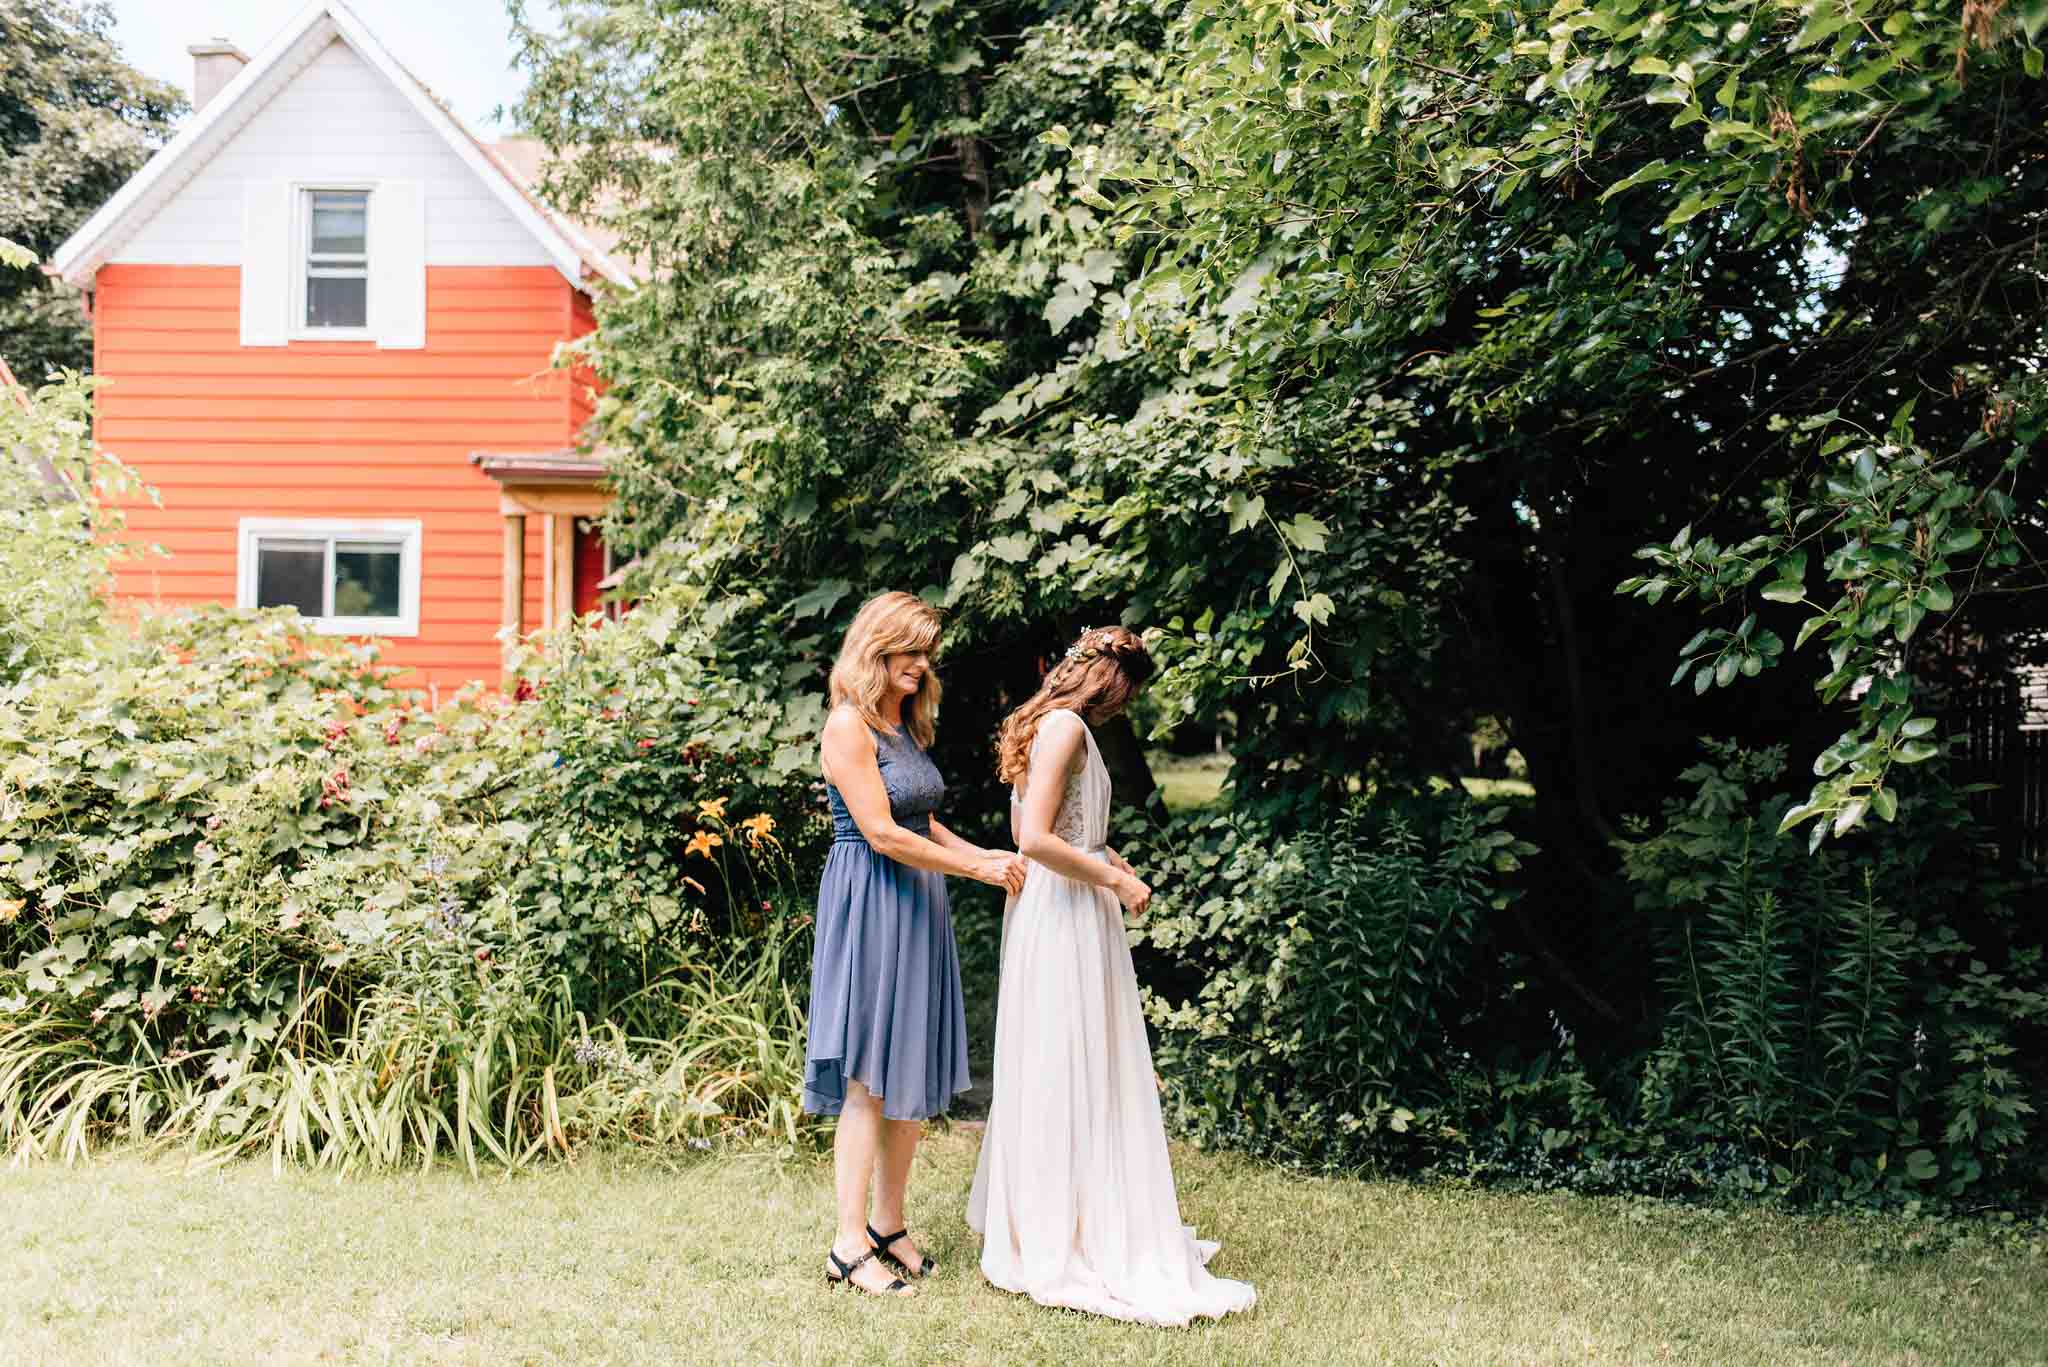 Candid wedding photographer | Olive Photography Toronto